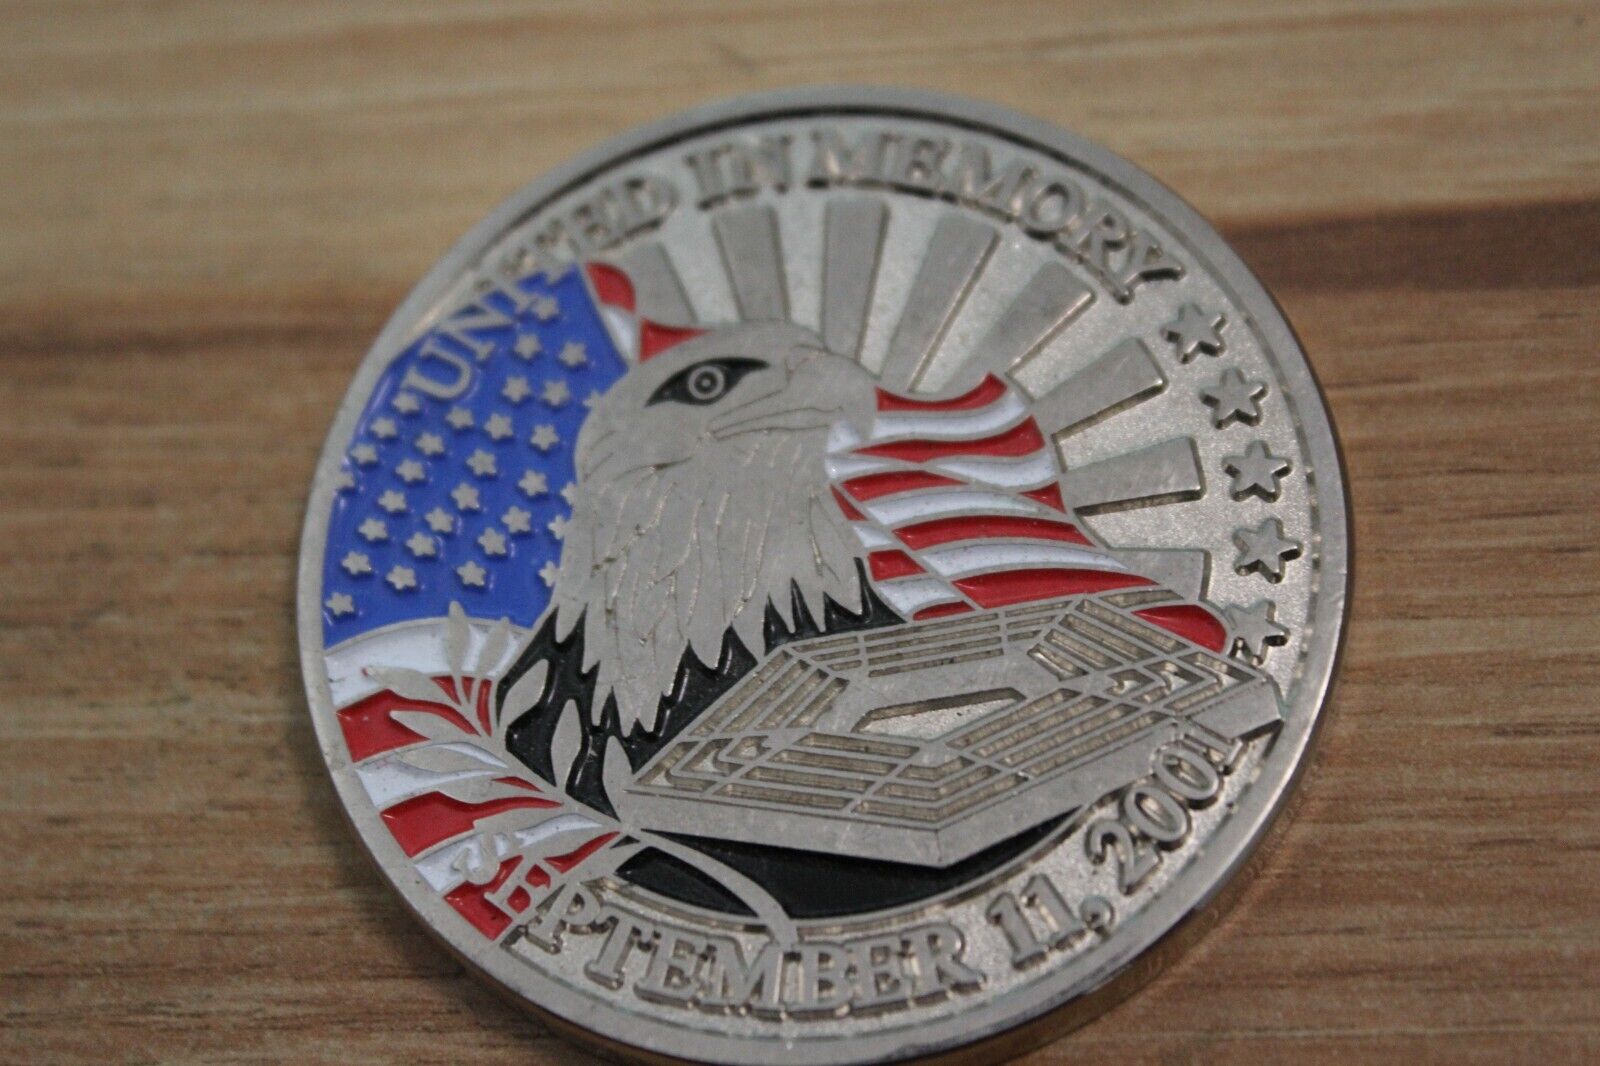 USAF Air Force 601st EAOG Commander Challenge Coin